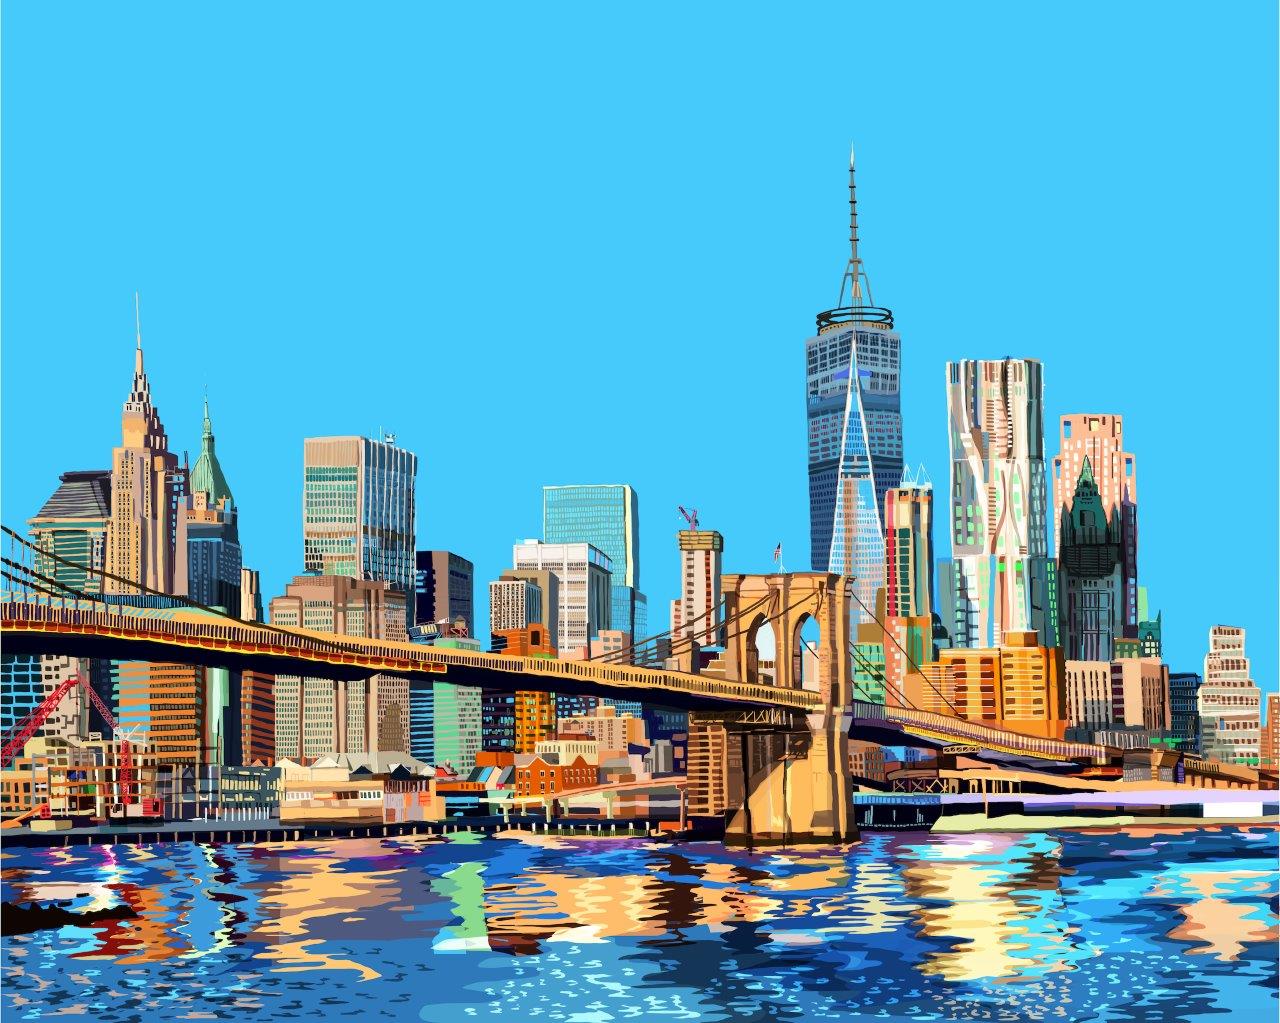 Brooklyn Bridge, New York City - tomARTacus